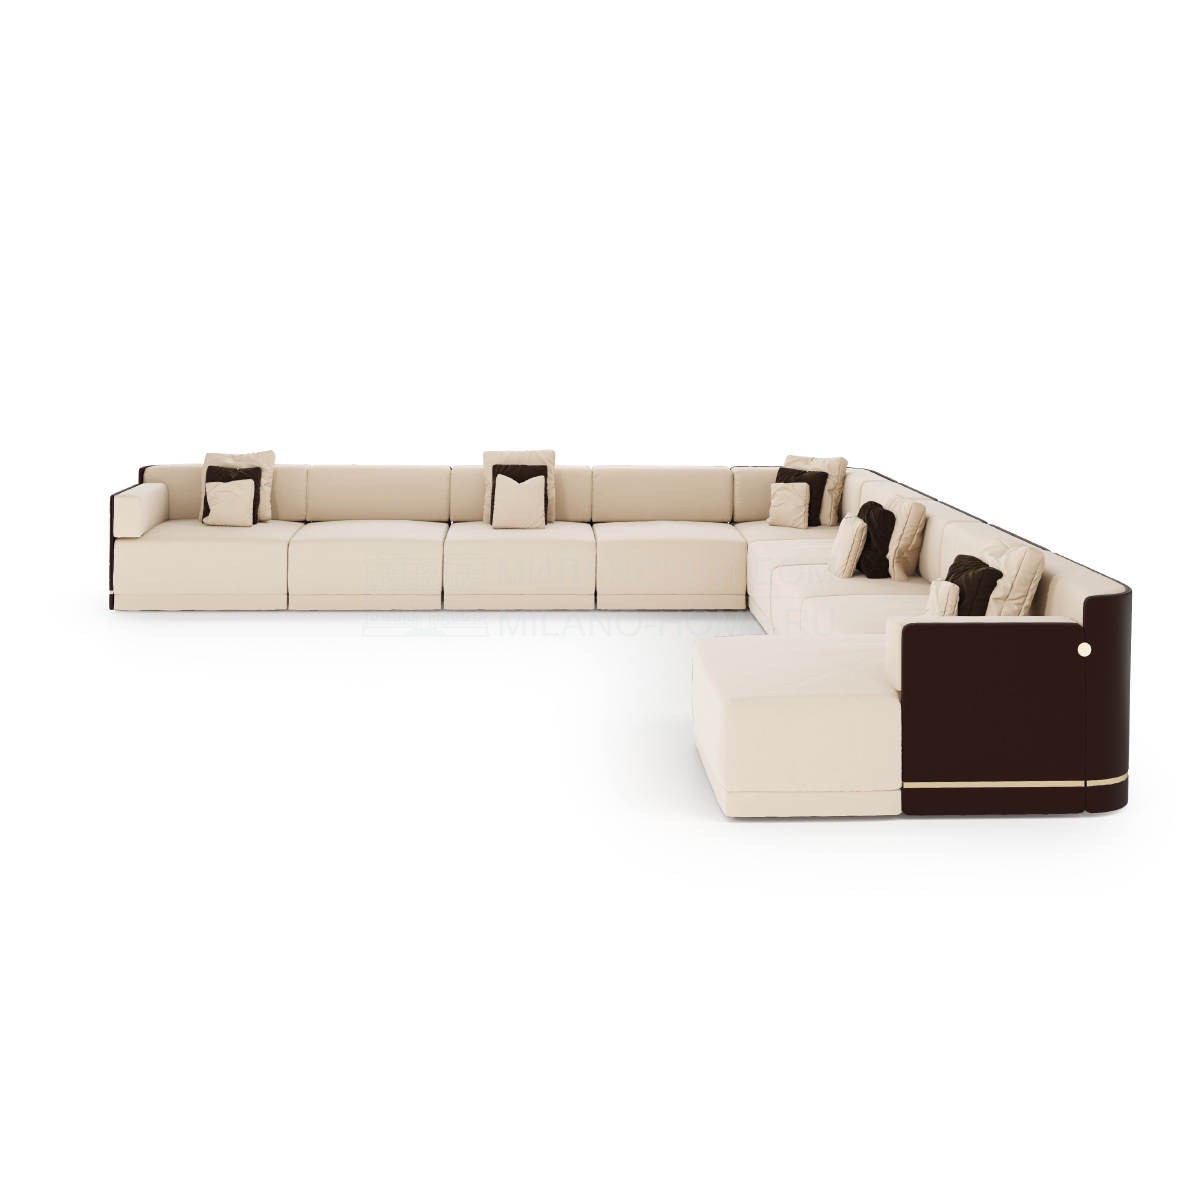 Модульный диван Avalon modular sofa из Италии фабрики TURRI